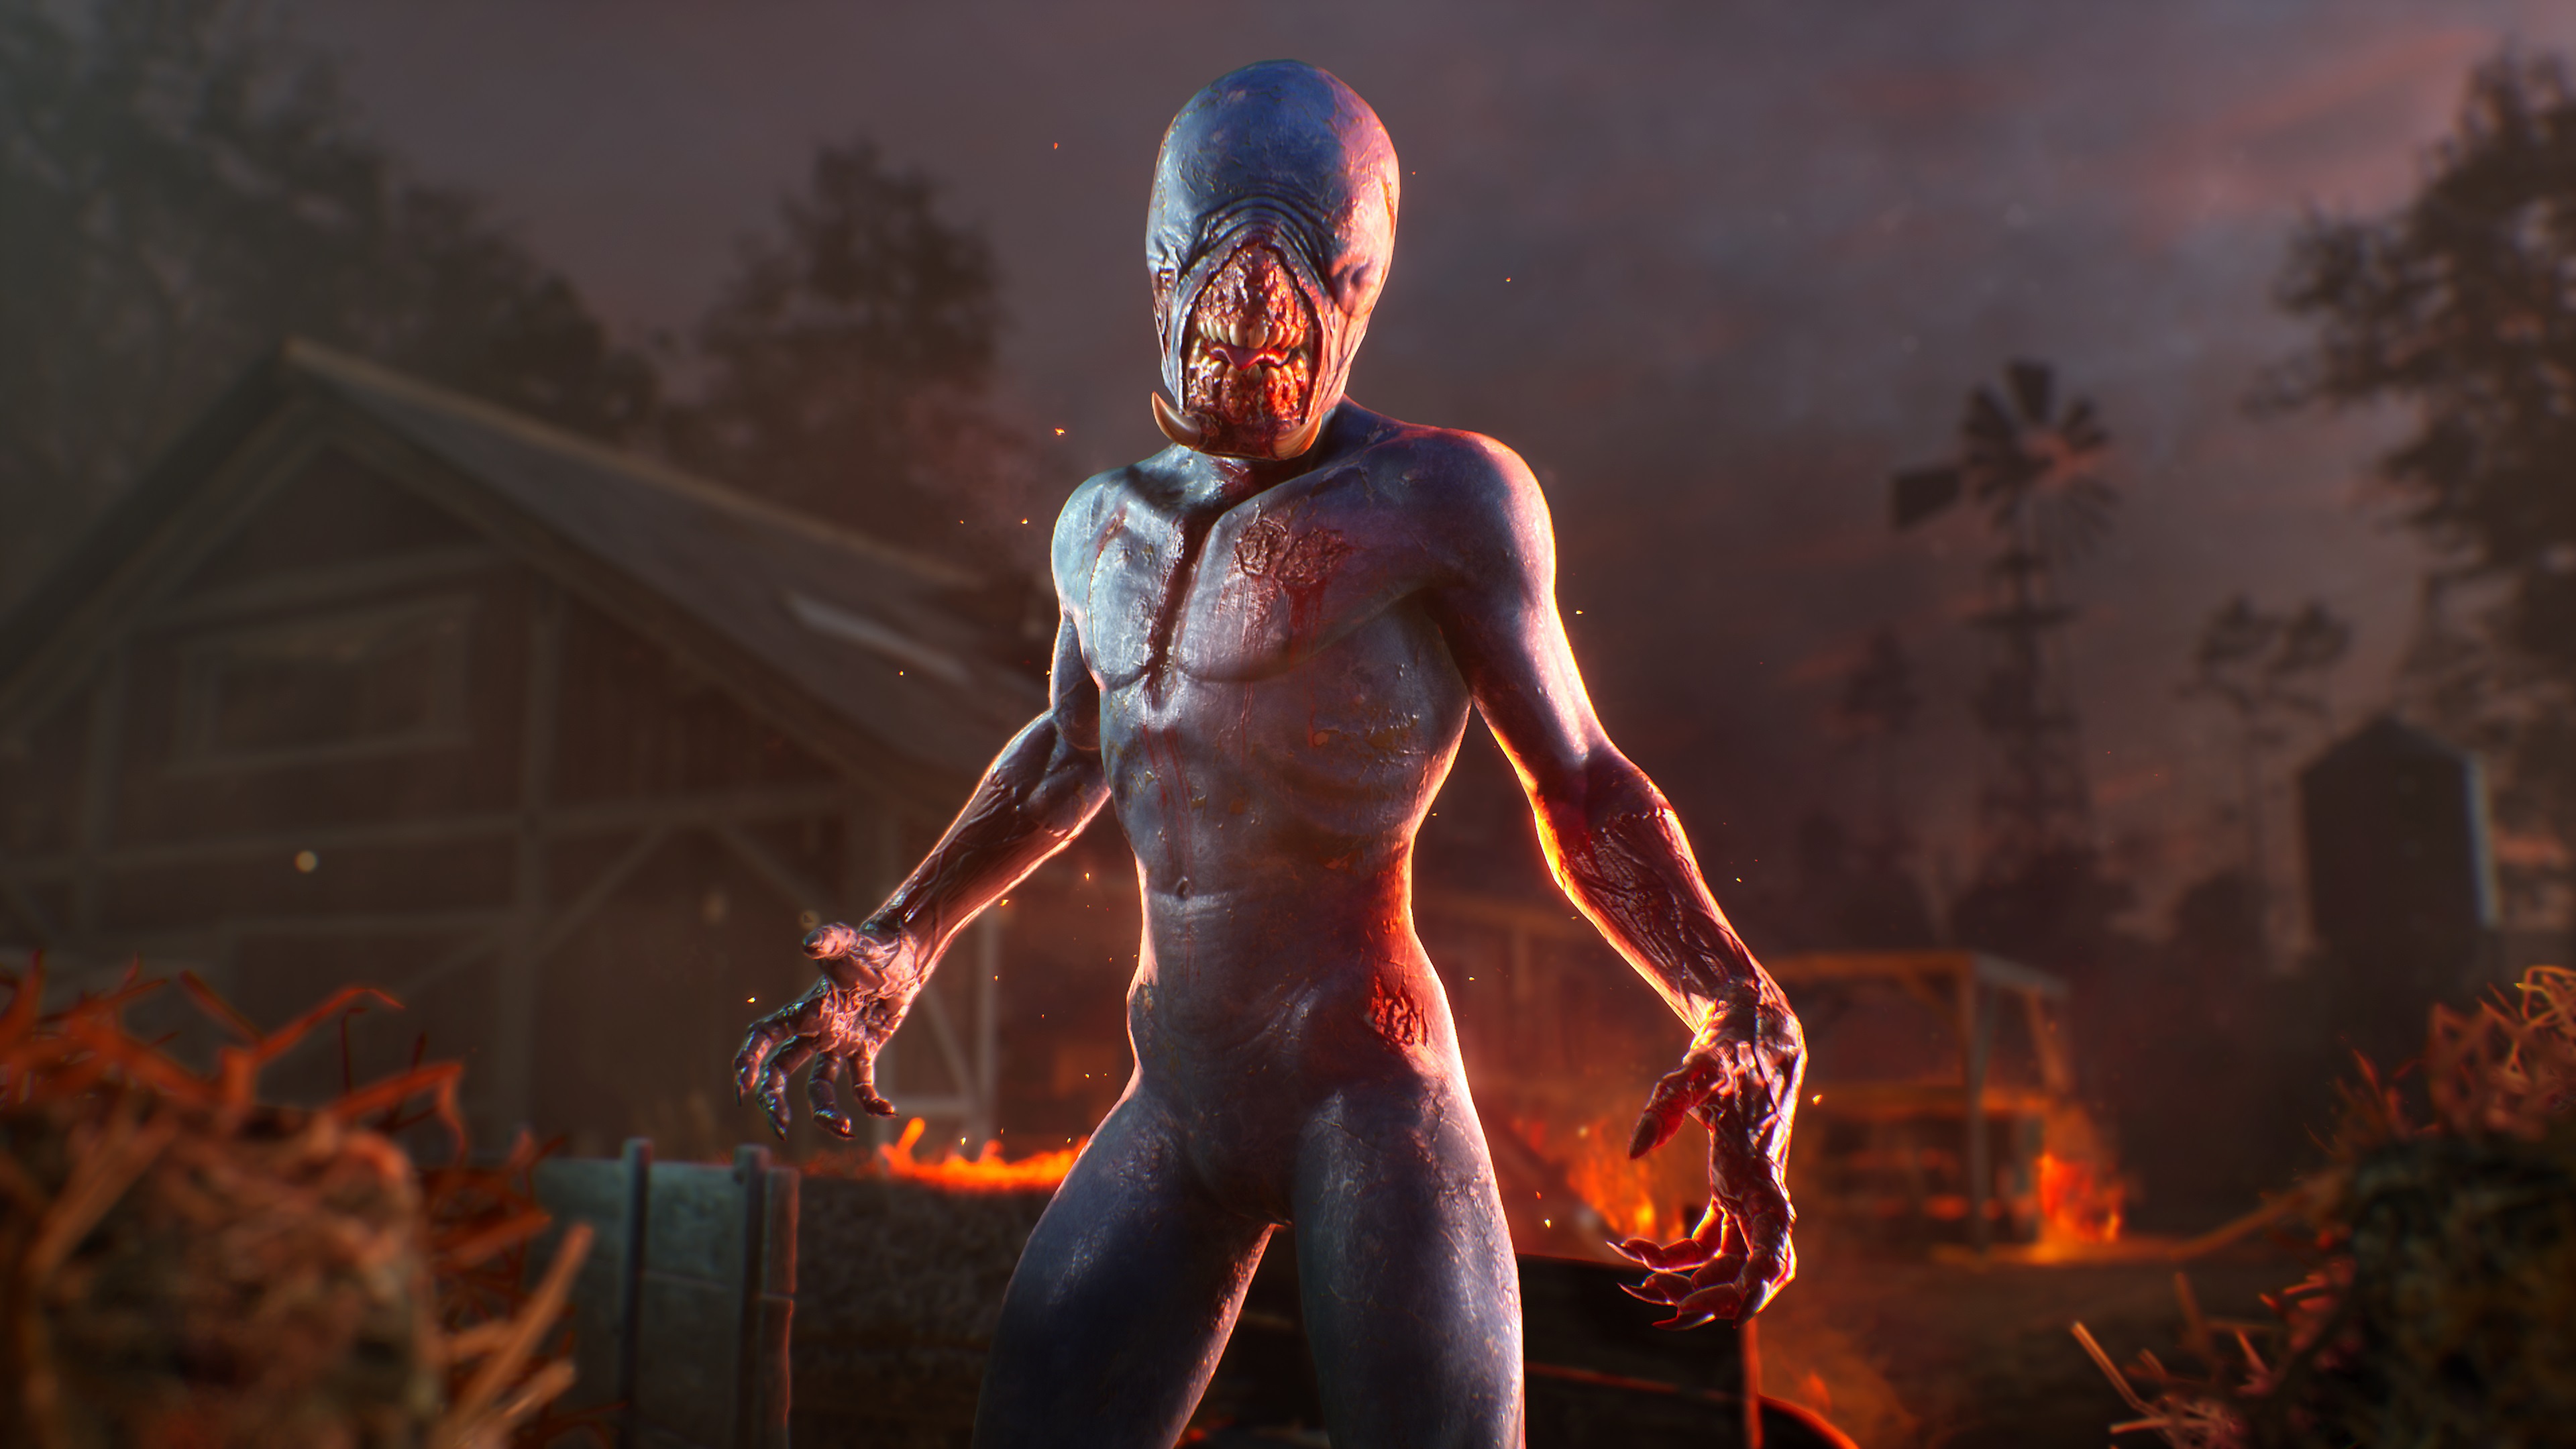 Evil Dead: The Game captura de pantalla que muestra a un personaje monstruoso